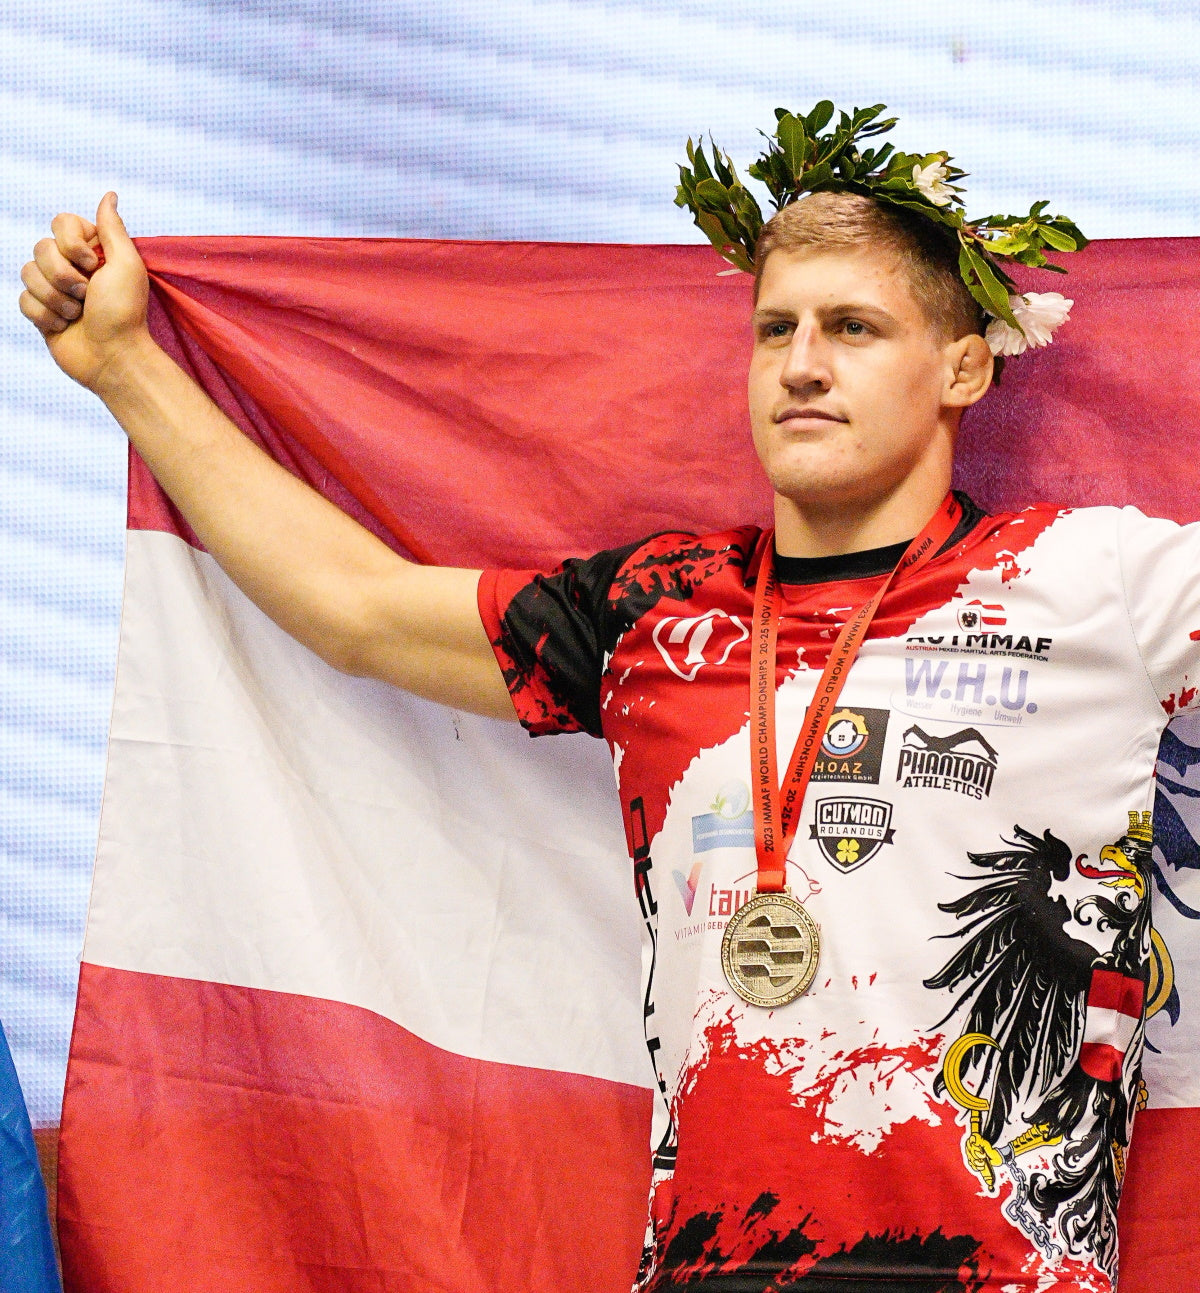 MMA Fighter Elias Erber beim Gewinn der Weltmeisterschaft